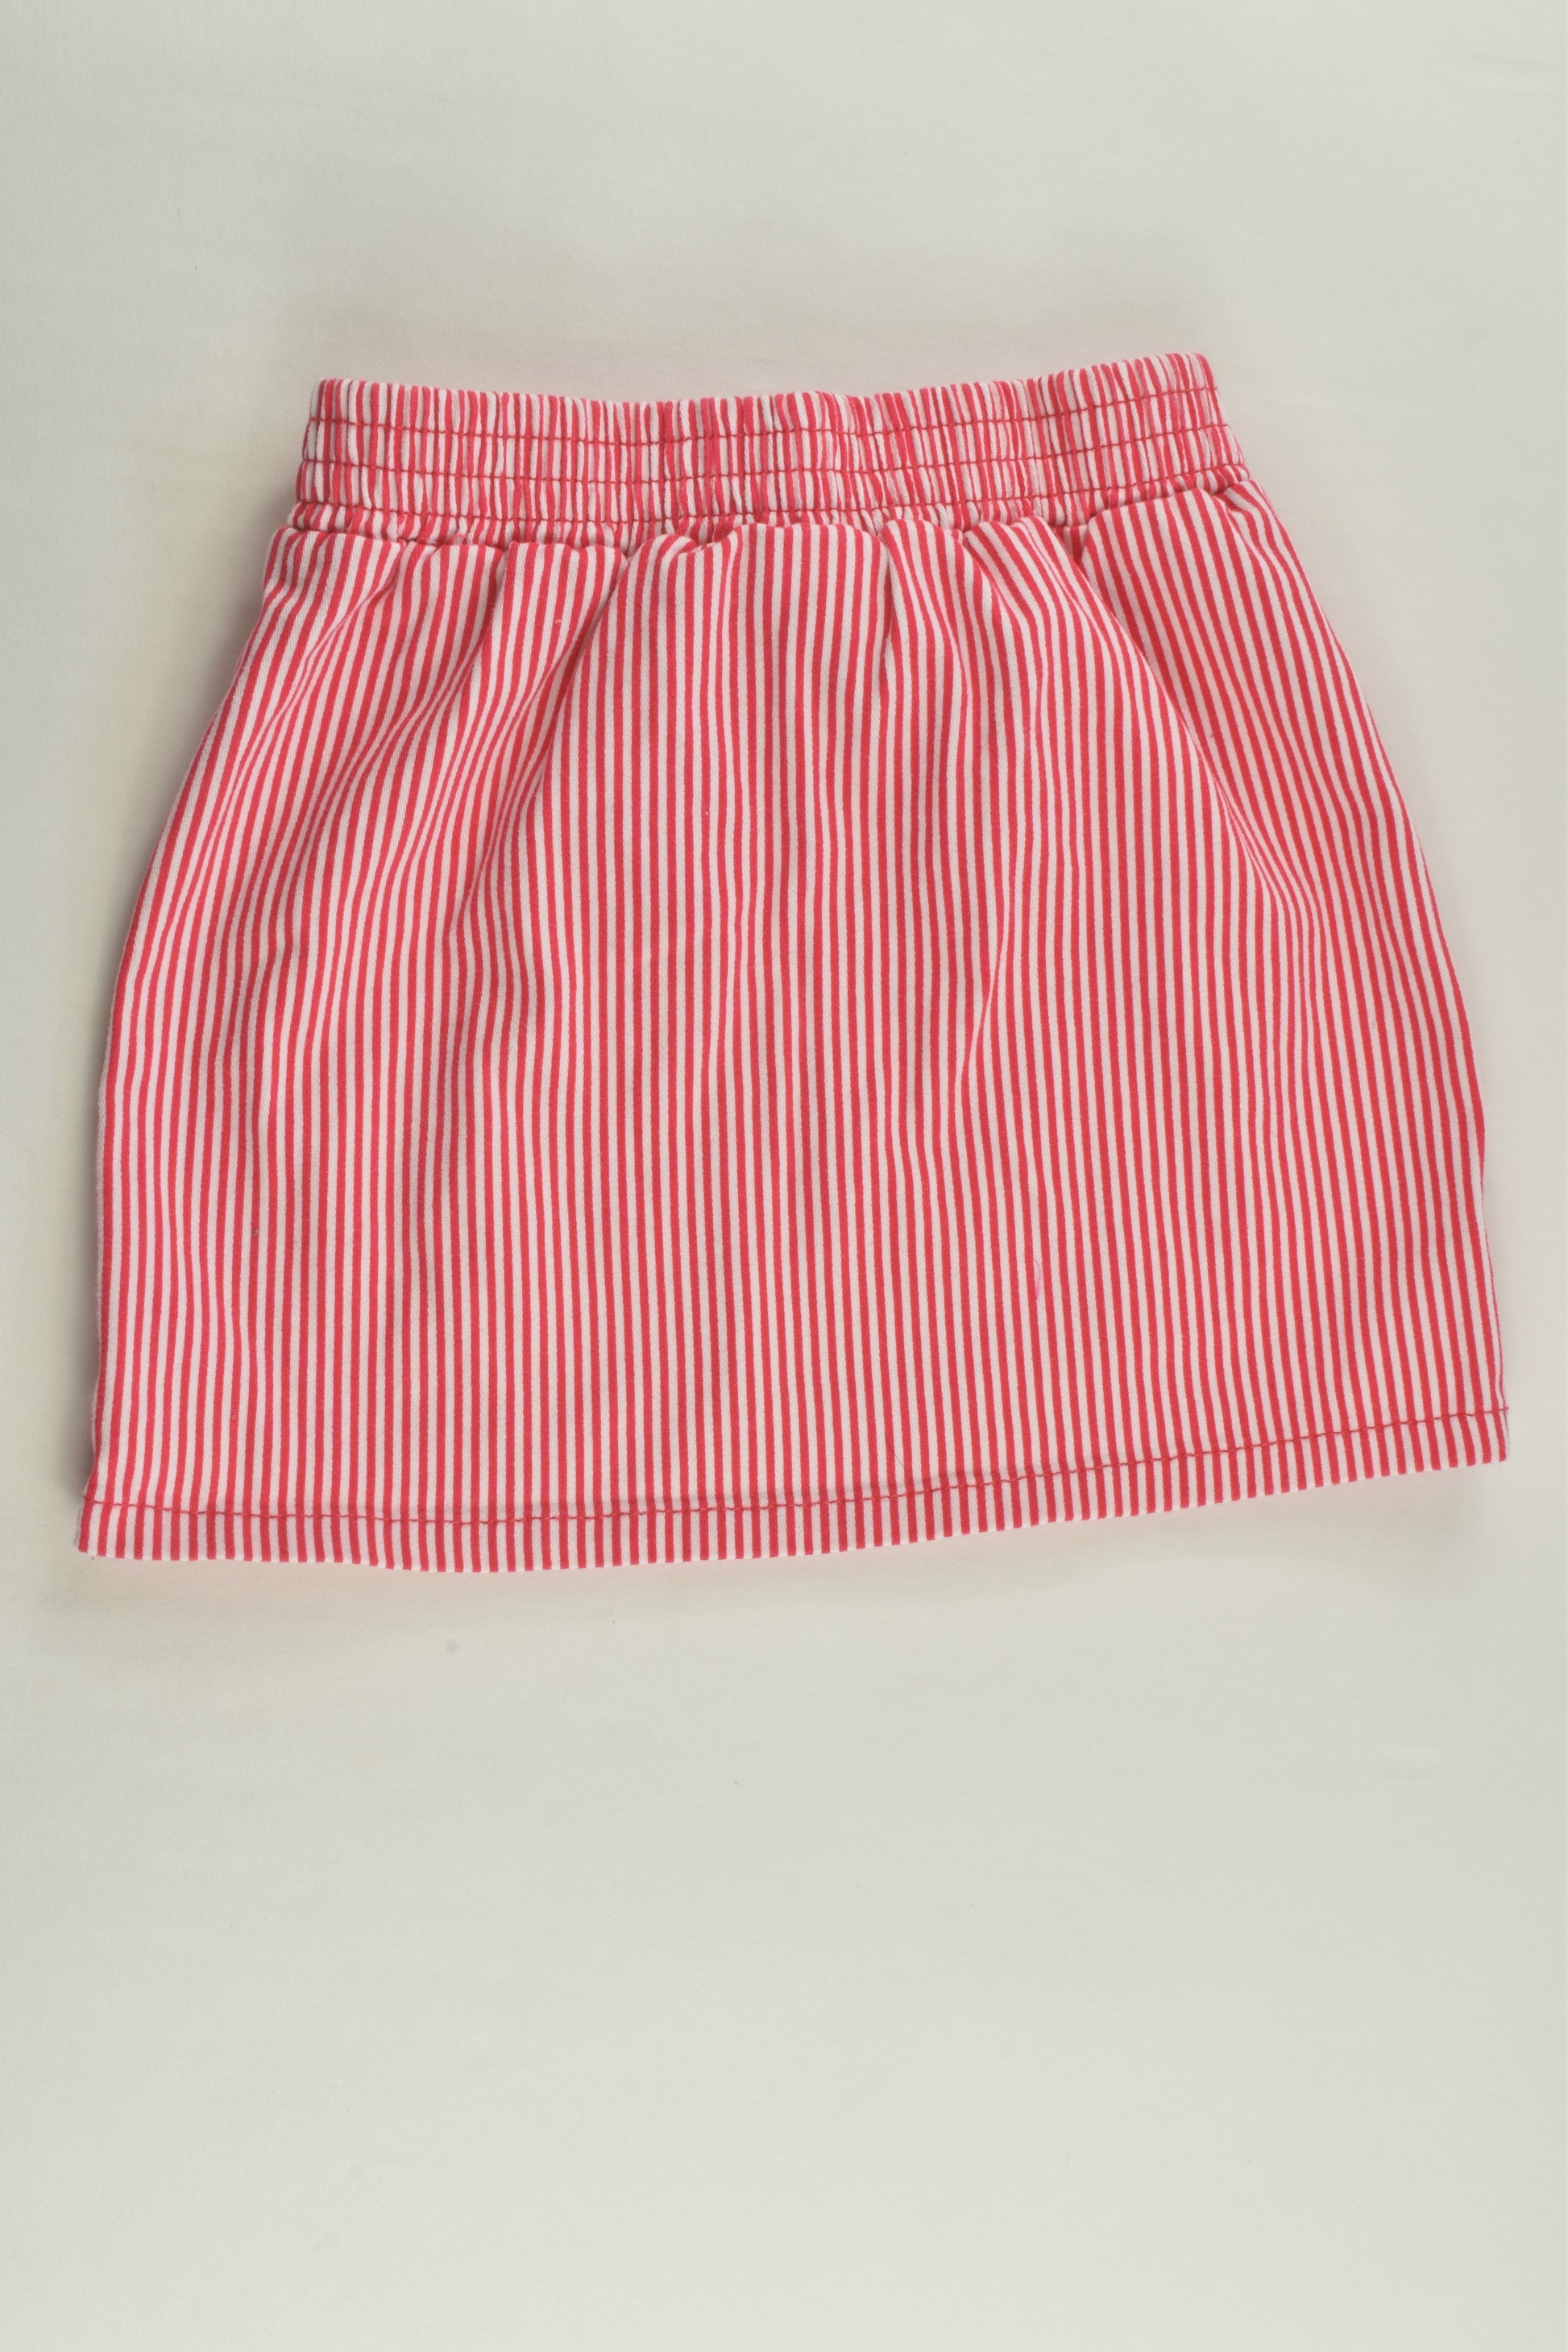 Kids & Co Size 4 Stretchy Striped Skirt